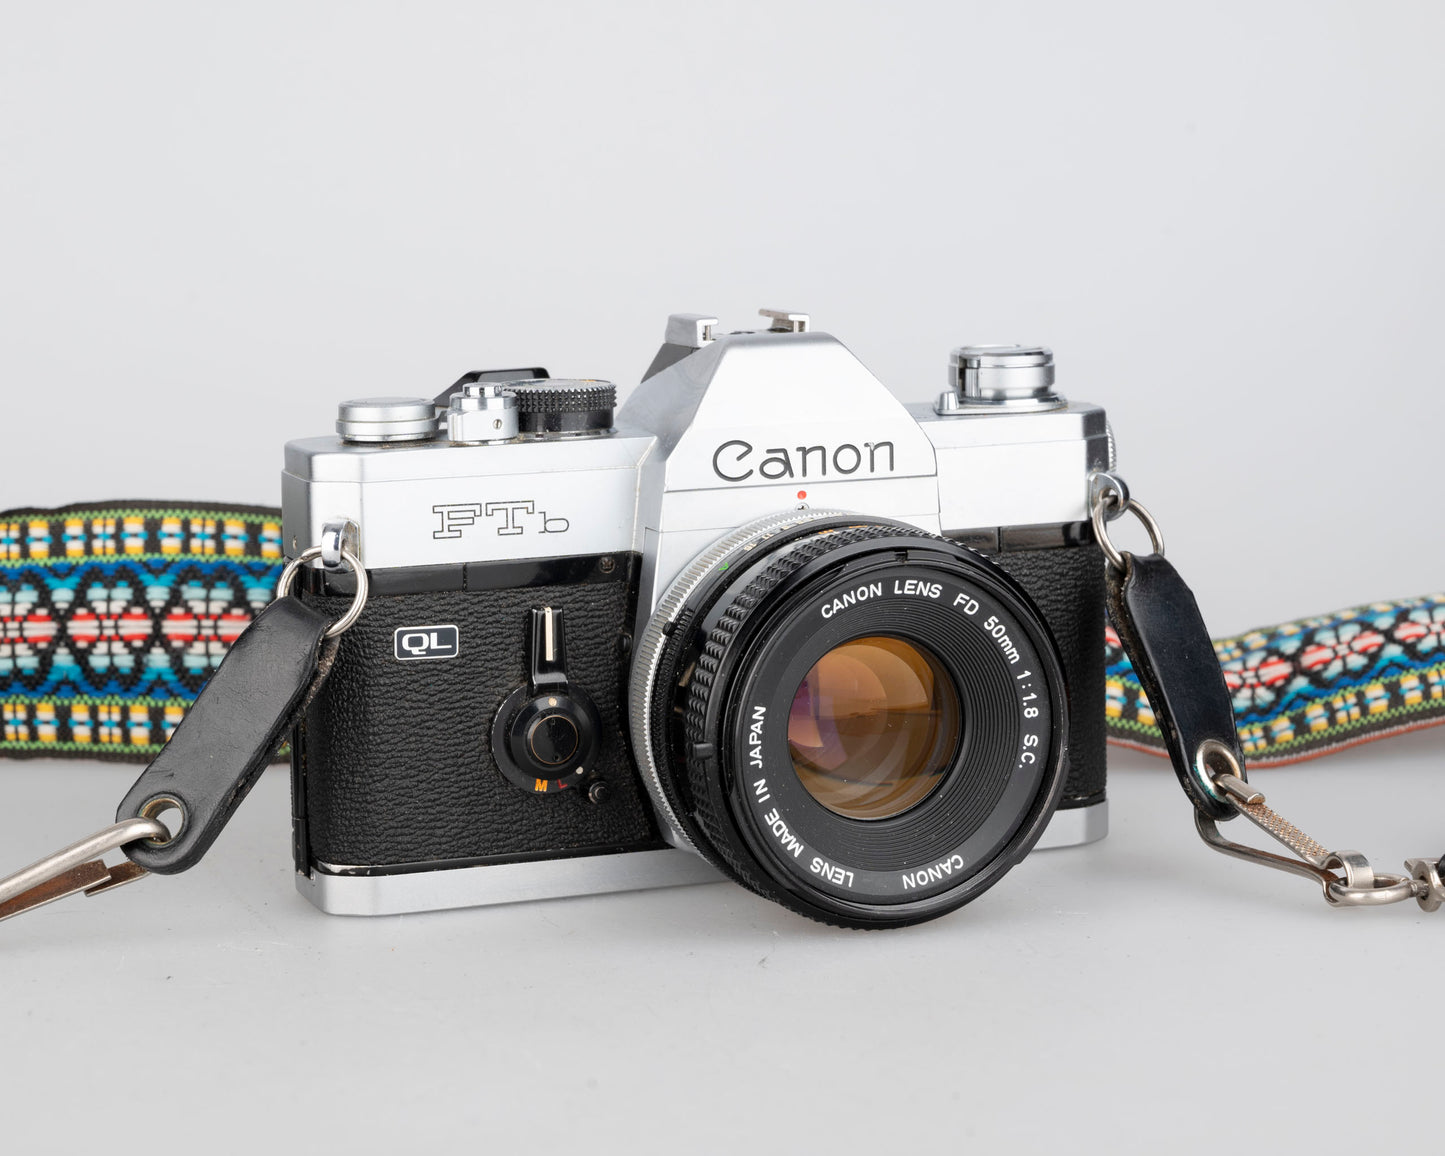 Canon FTb 35mm film SLR w/ Canon FD 50mm f1.8 lens (serial 451988)